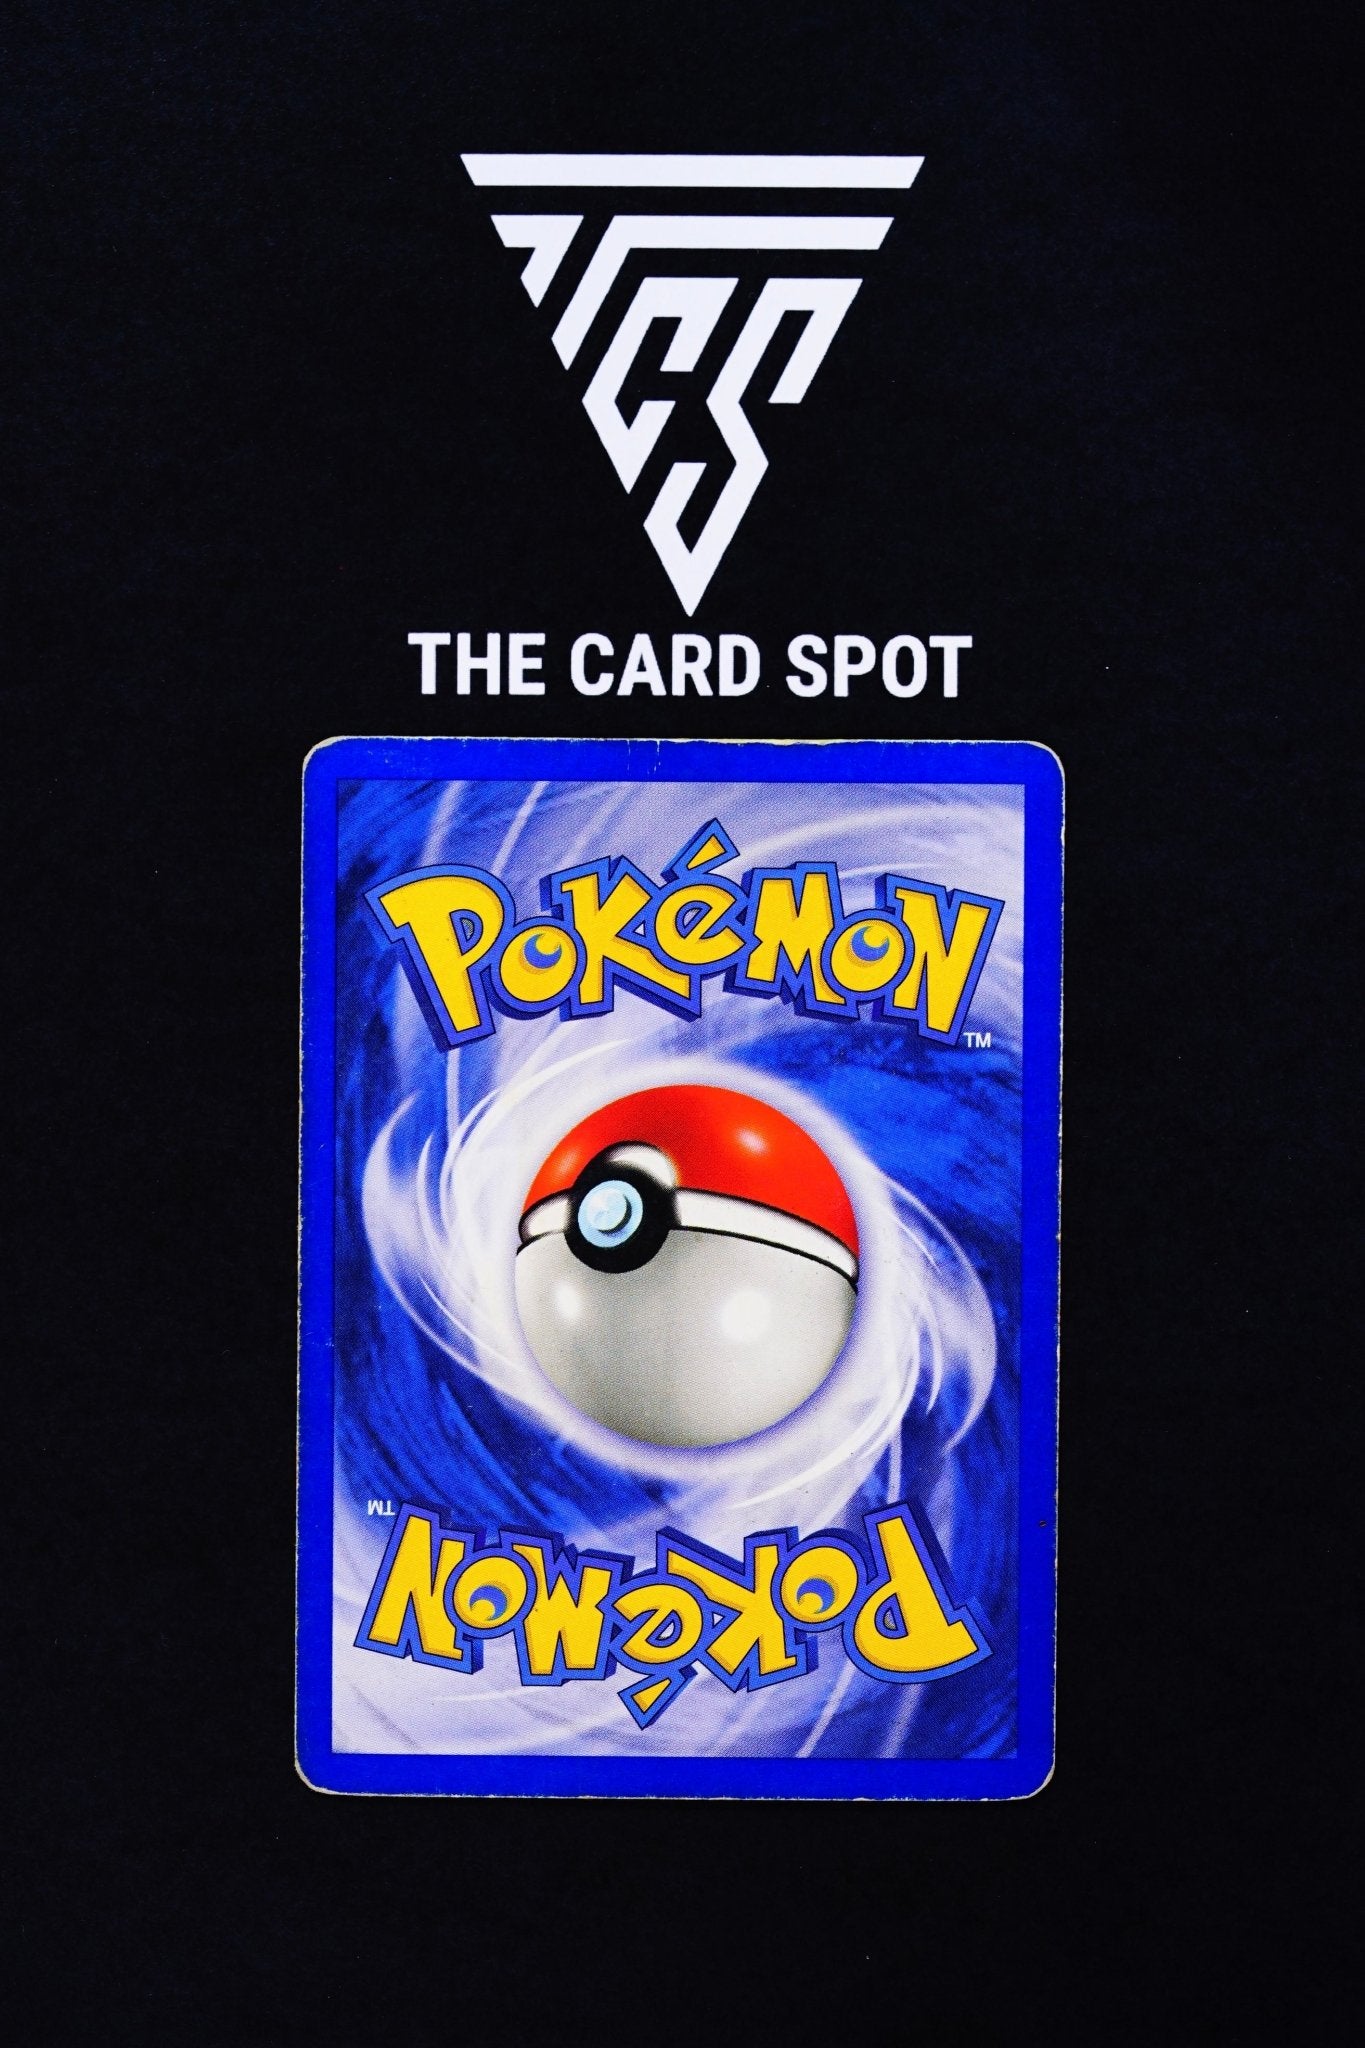 Jolteon 4/64 Holo - Jungle - Pokemon Card For Sale - THE CARD SPOT PTY LTD.Pokemon Raw CardsPokémon